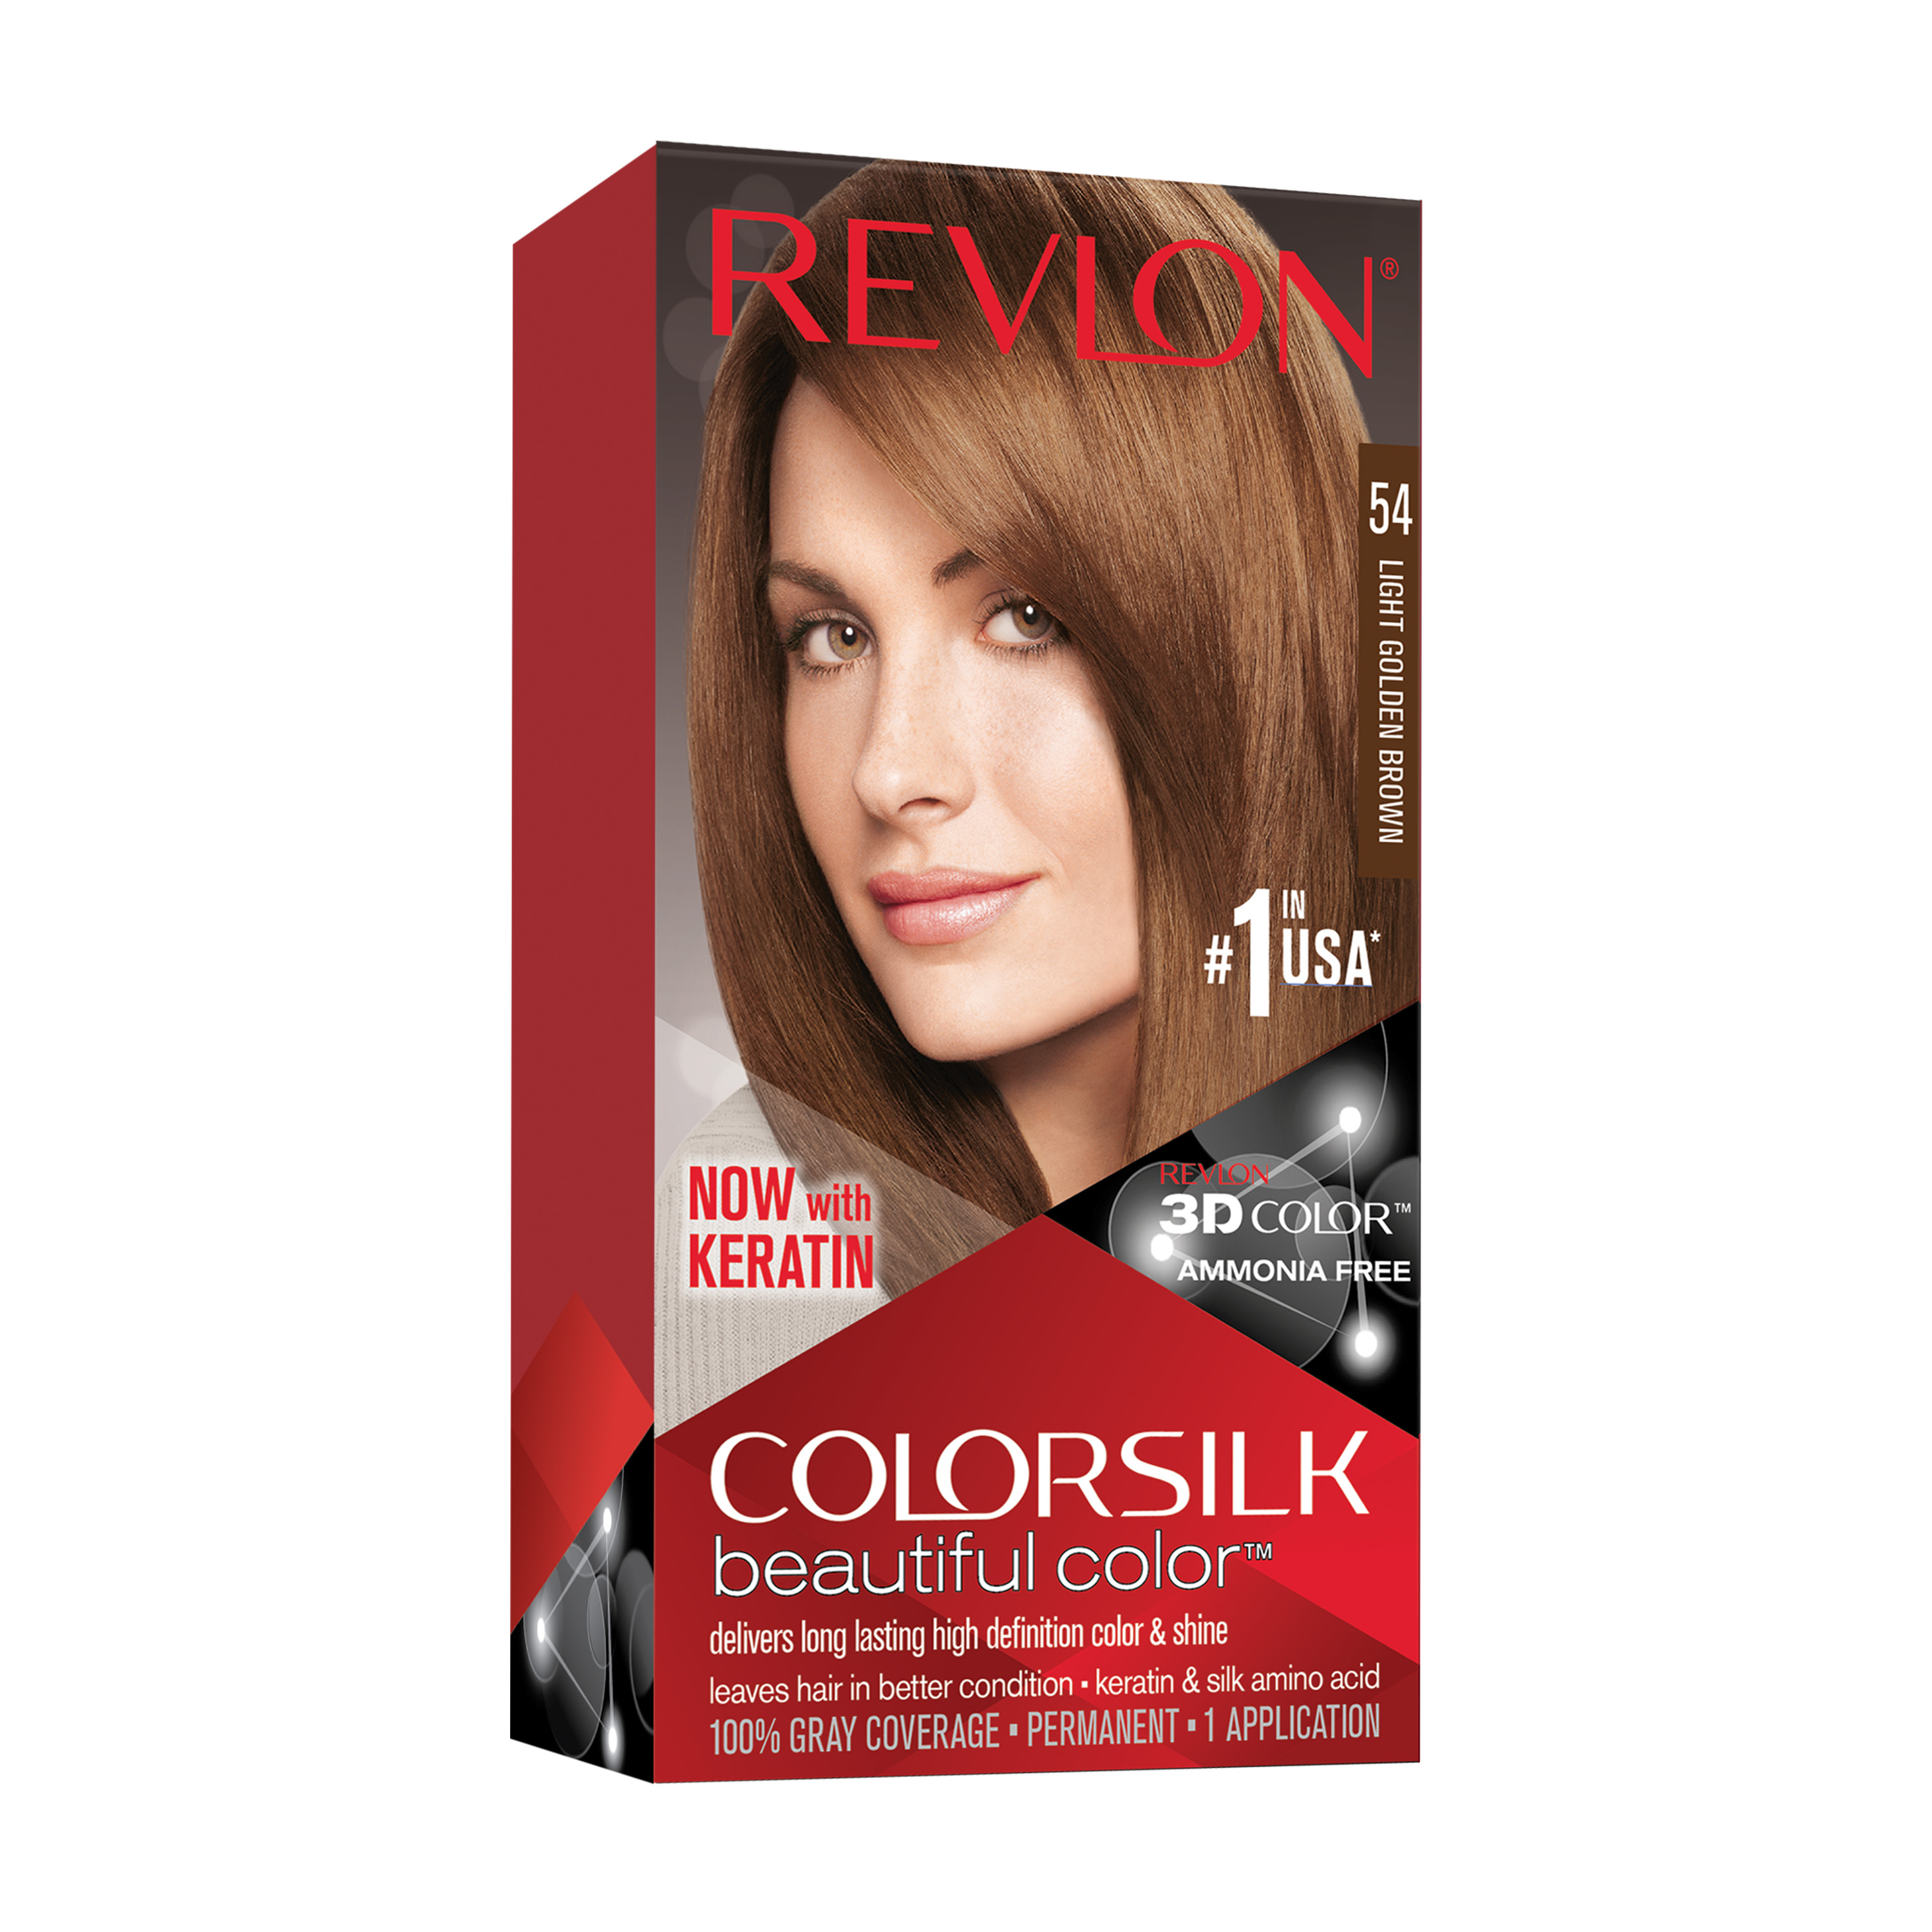 Revlon ColorSilk Beautiful Color Hair Color - Light Golden Brown - image 1 of 14